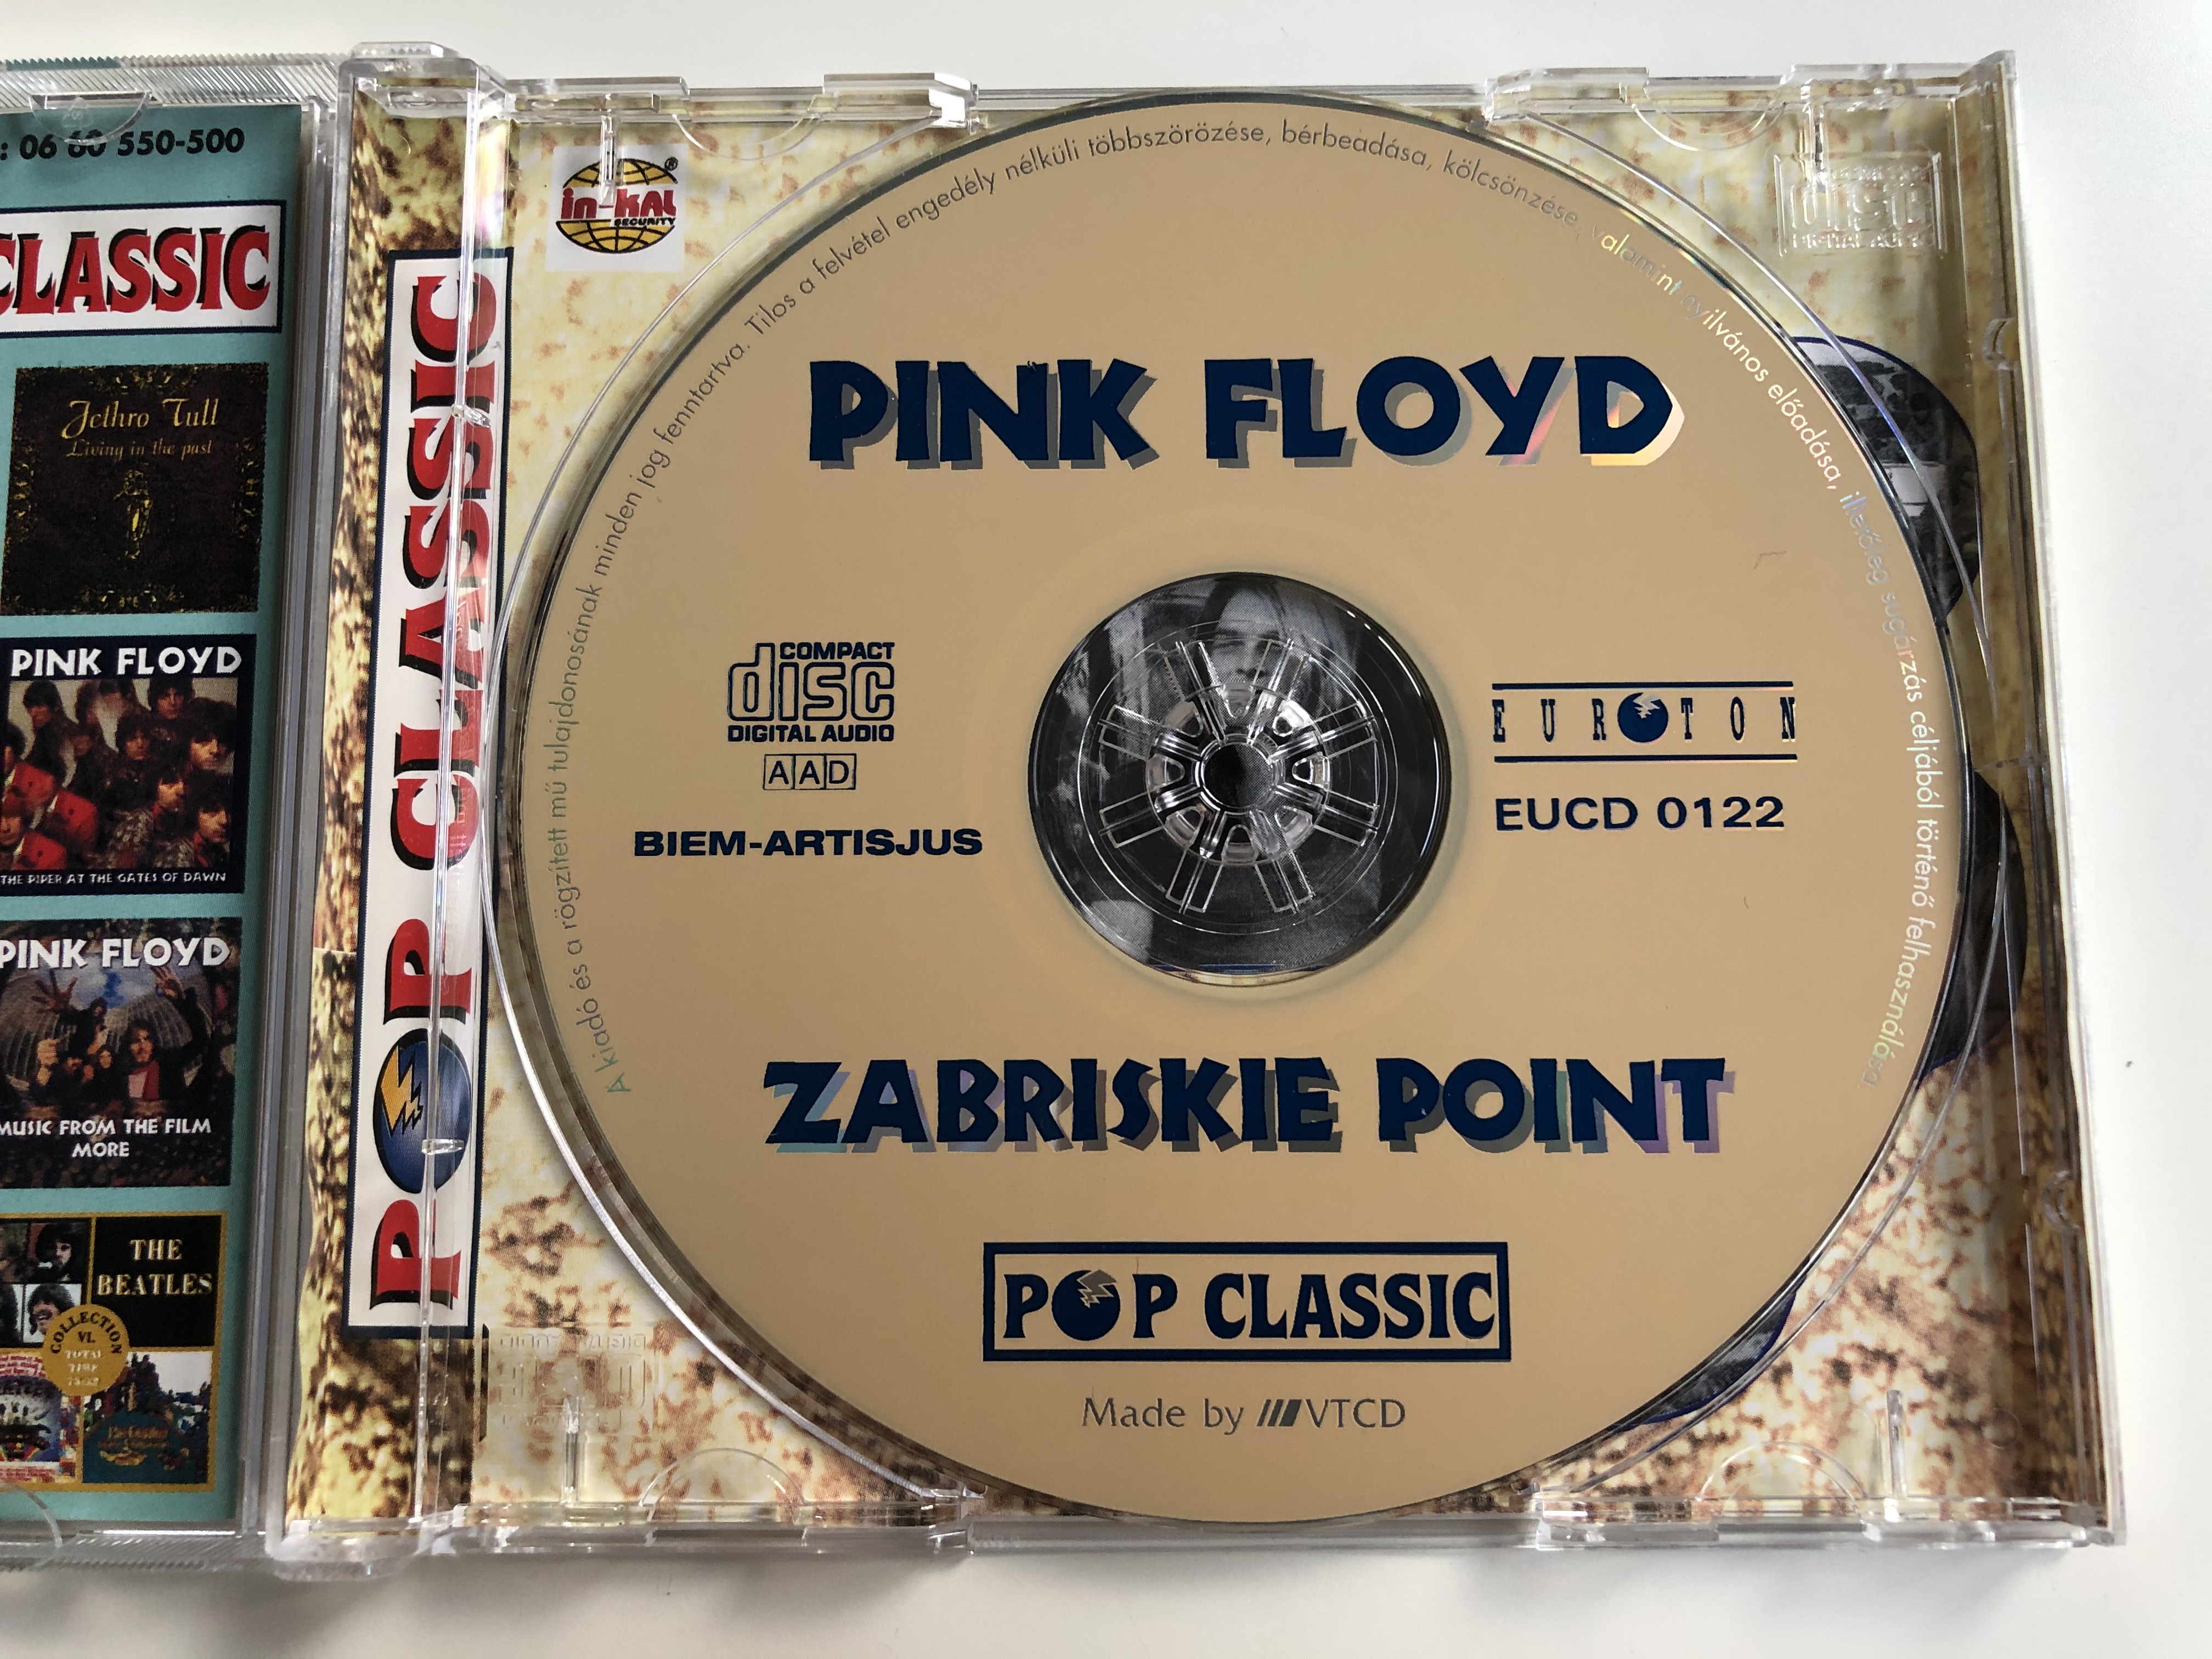 pink-floyd-zabriskie-point-total-time-72.22-pop-classic-euroton-audio-cd-eucd-0122-2-.jpg